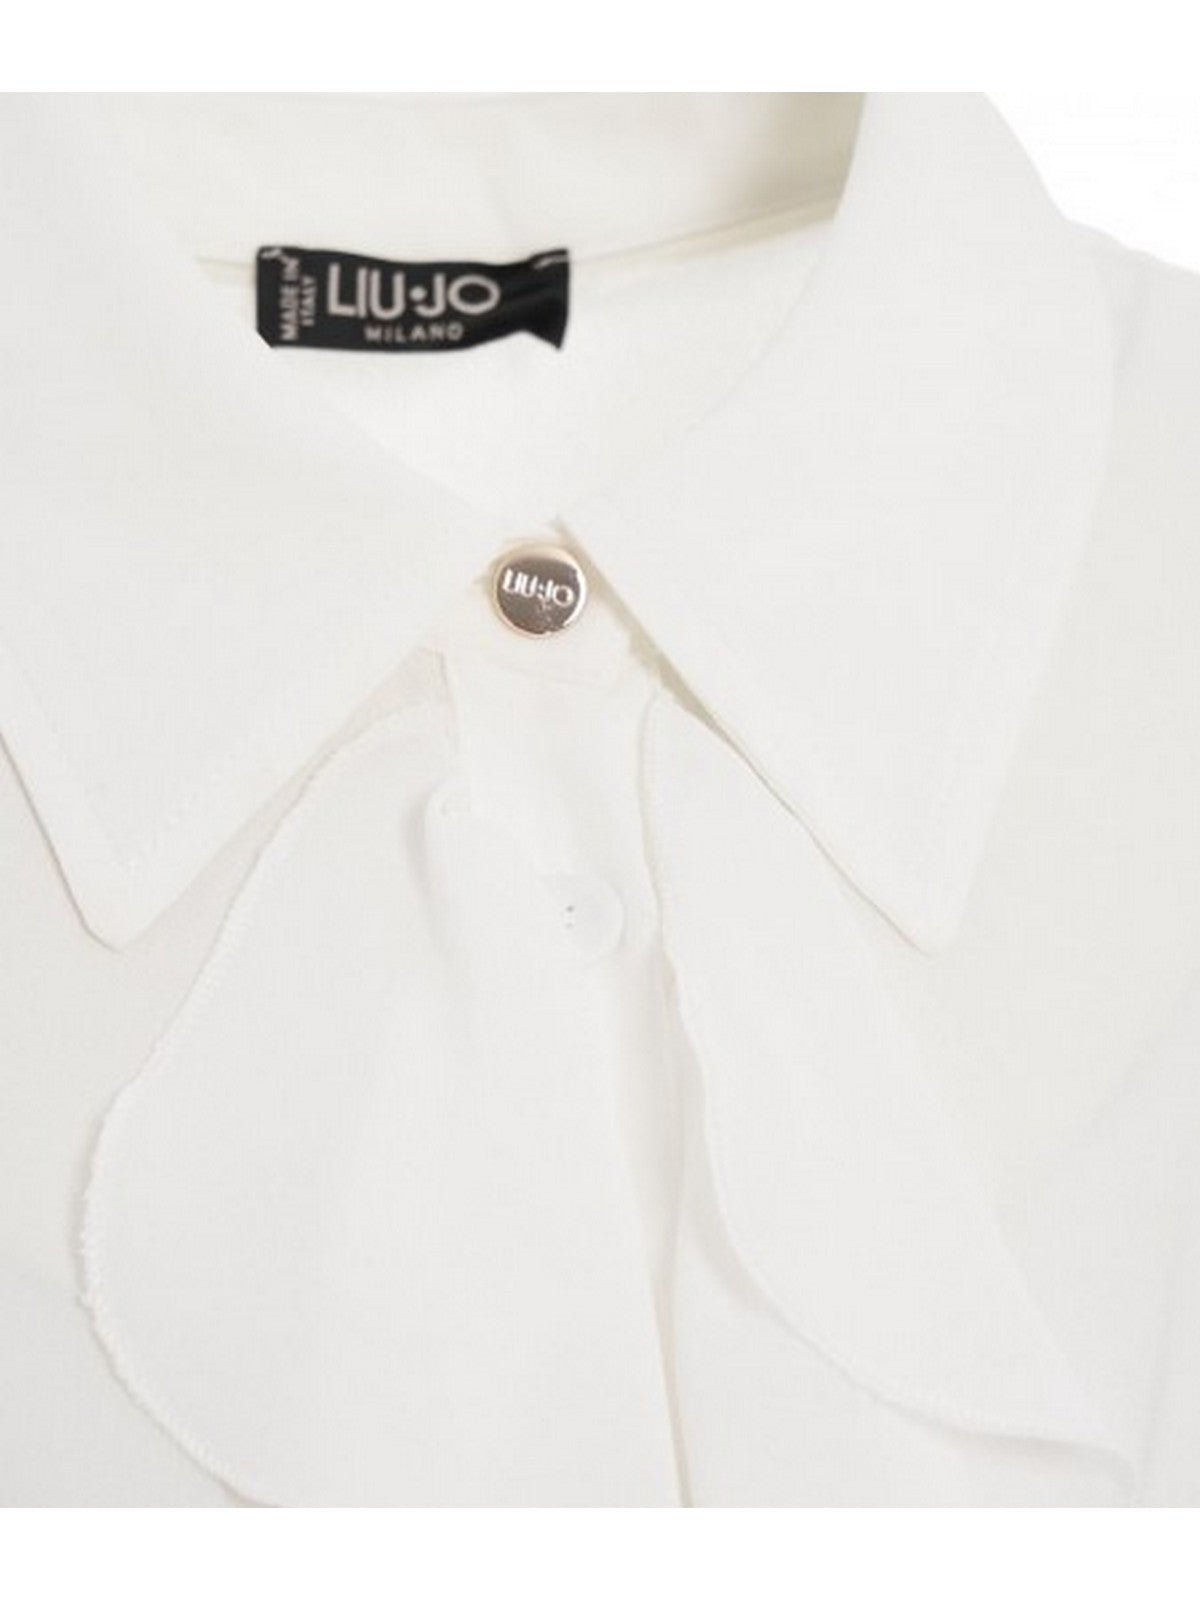 LIU JO BLACK Camicia Donna  CF3275TS353 X0256 Bianco